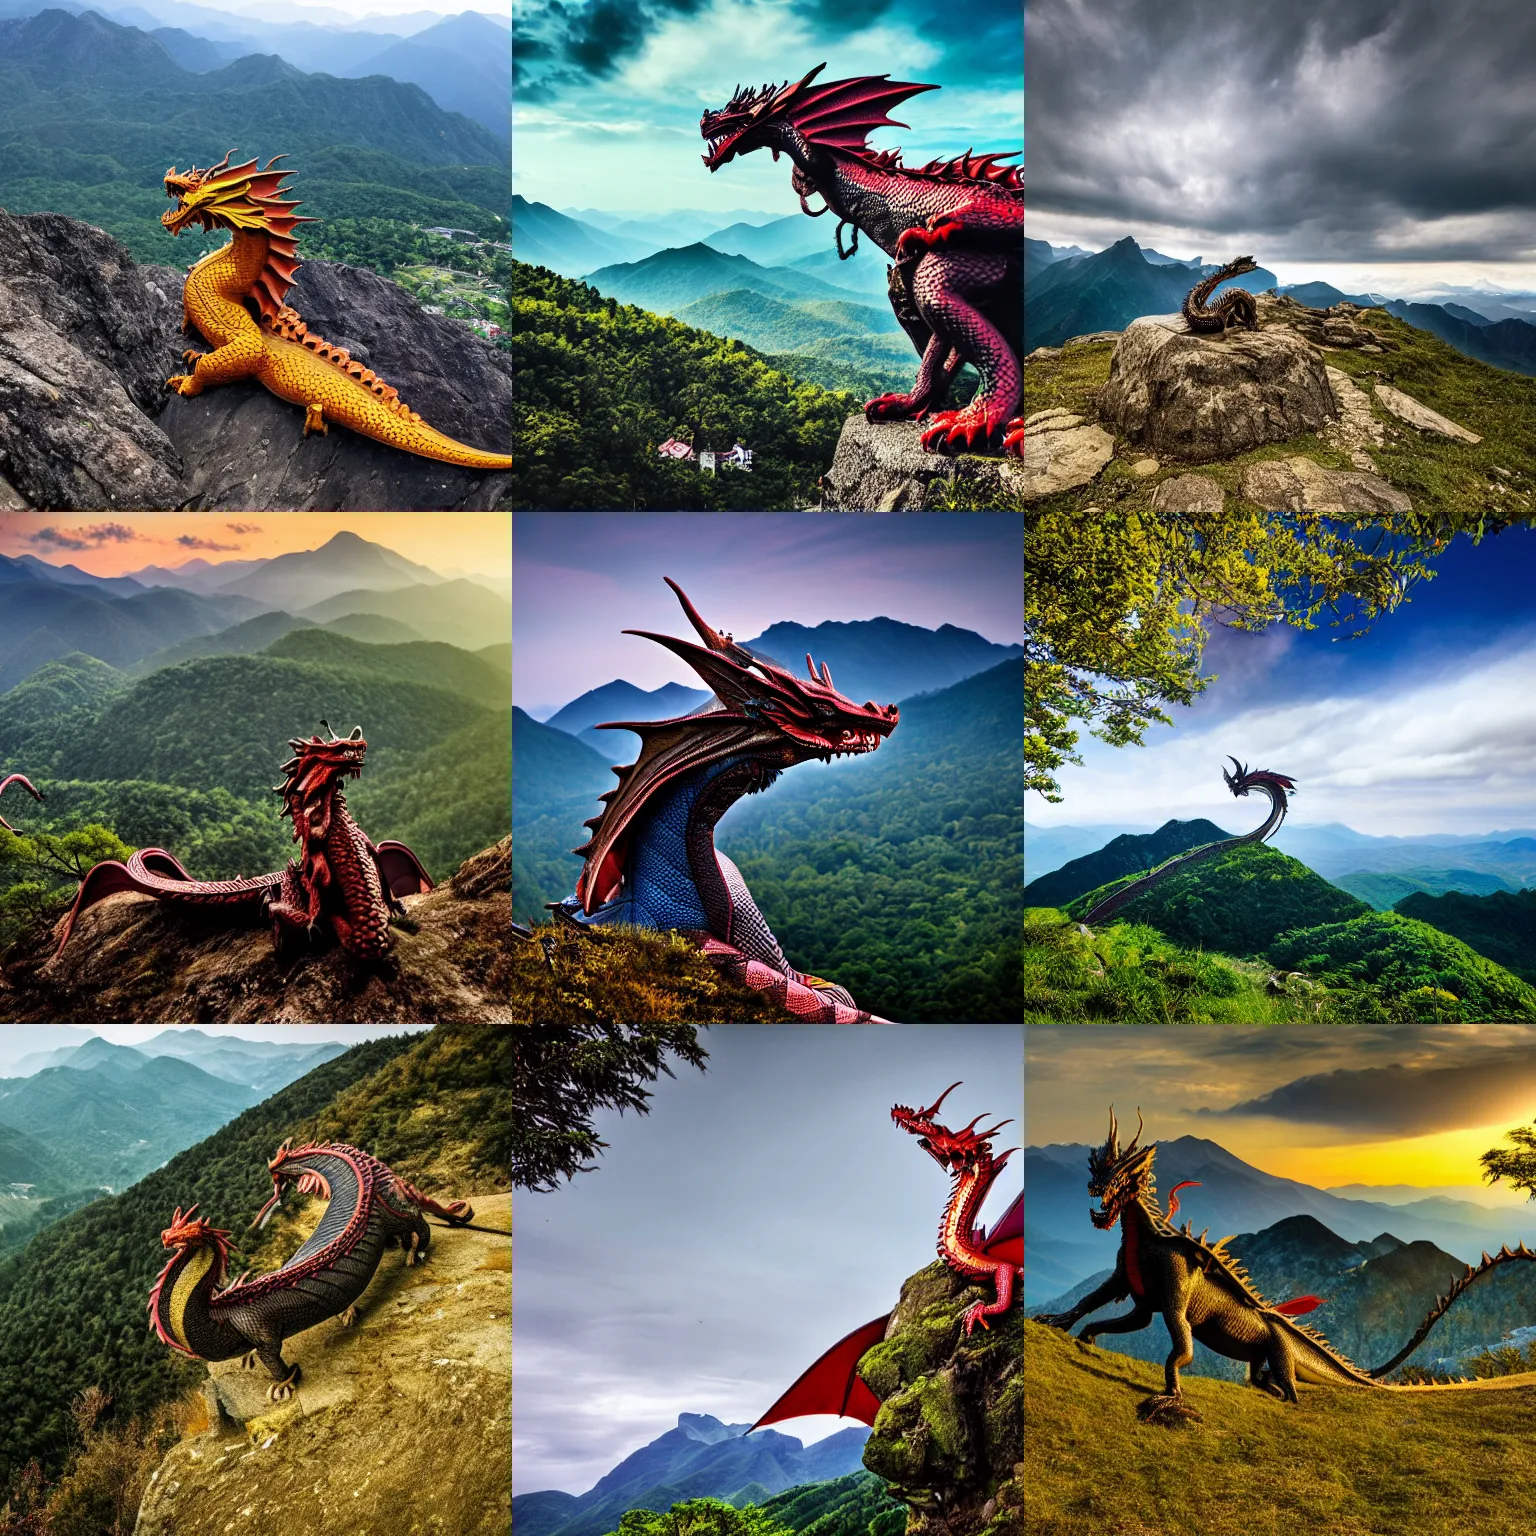 Prompt: <photo hd>dragon on mountain overlooking village